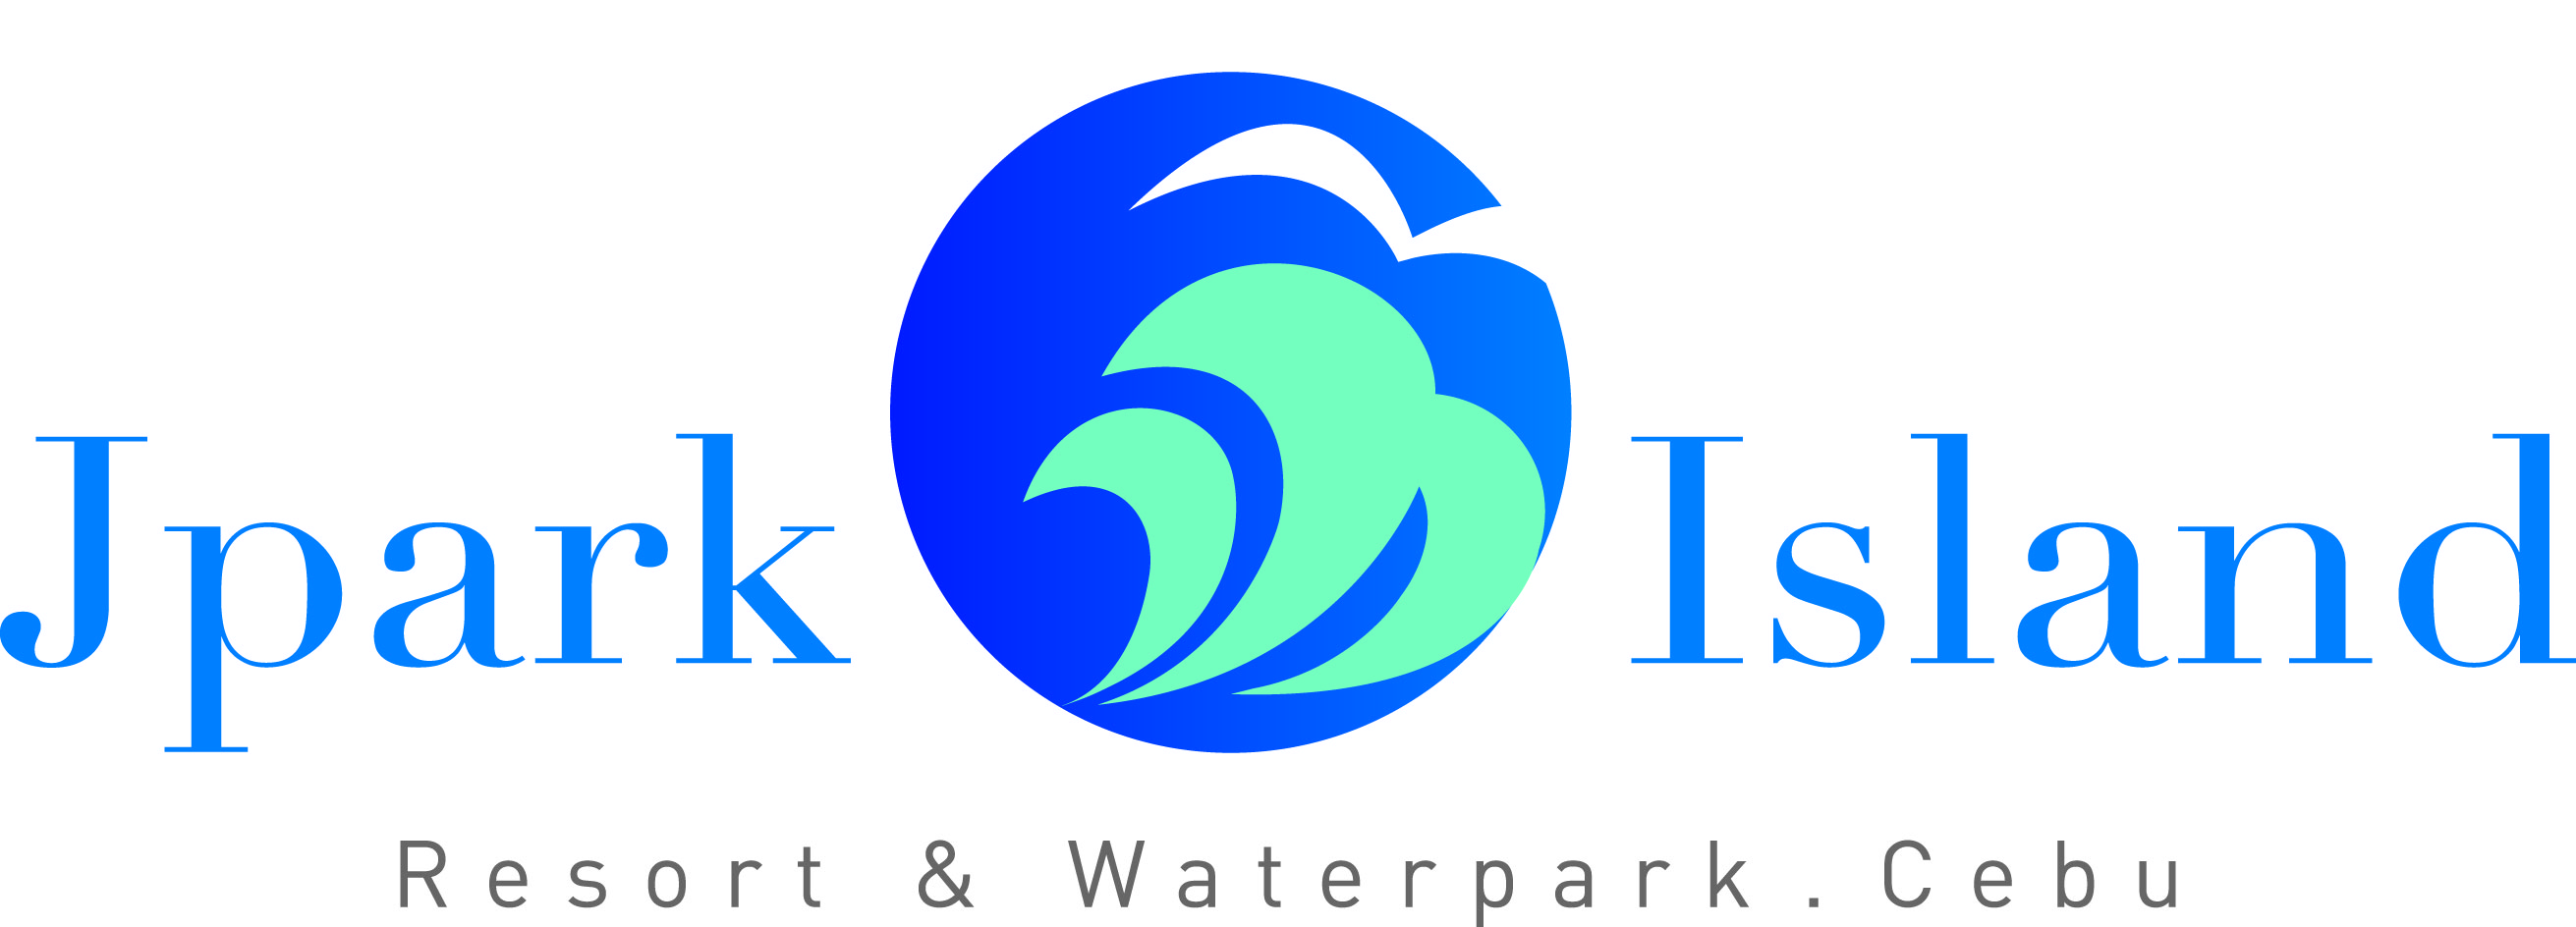 Job hiring at Jpark Island Resort & Waterpark Cebu, Job vacancy in Jpark Island Resort & Waterpark Cebu